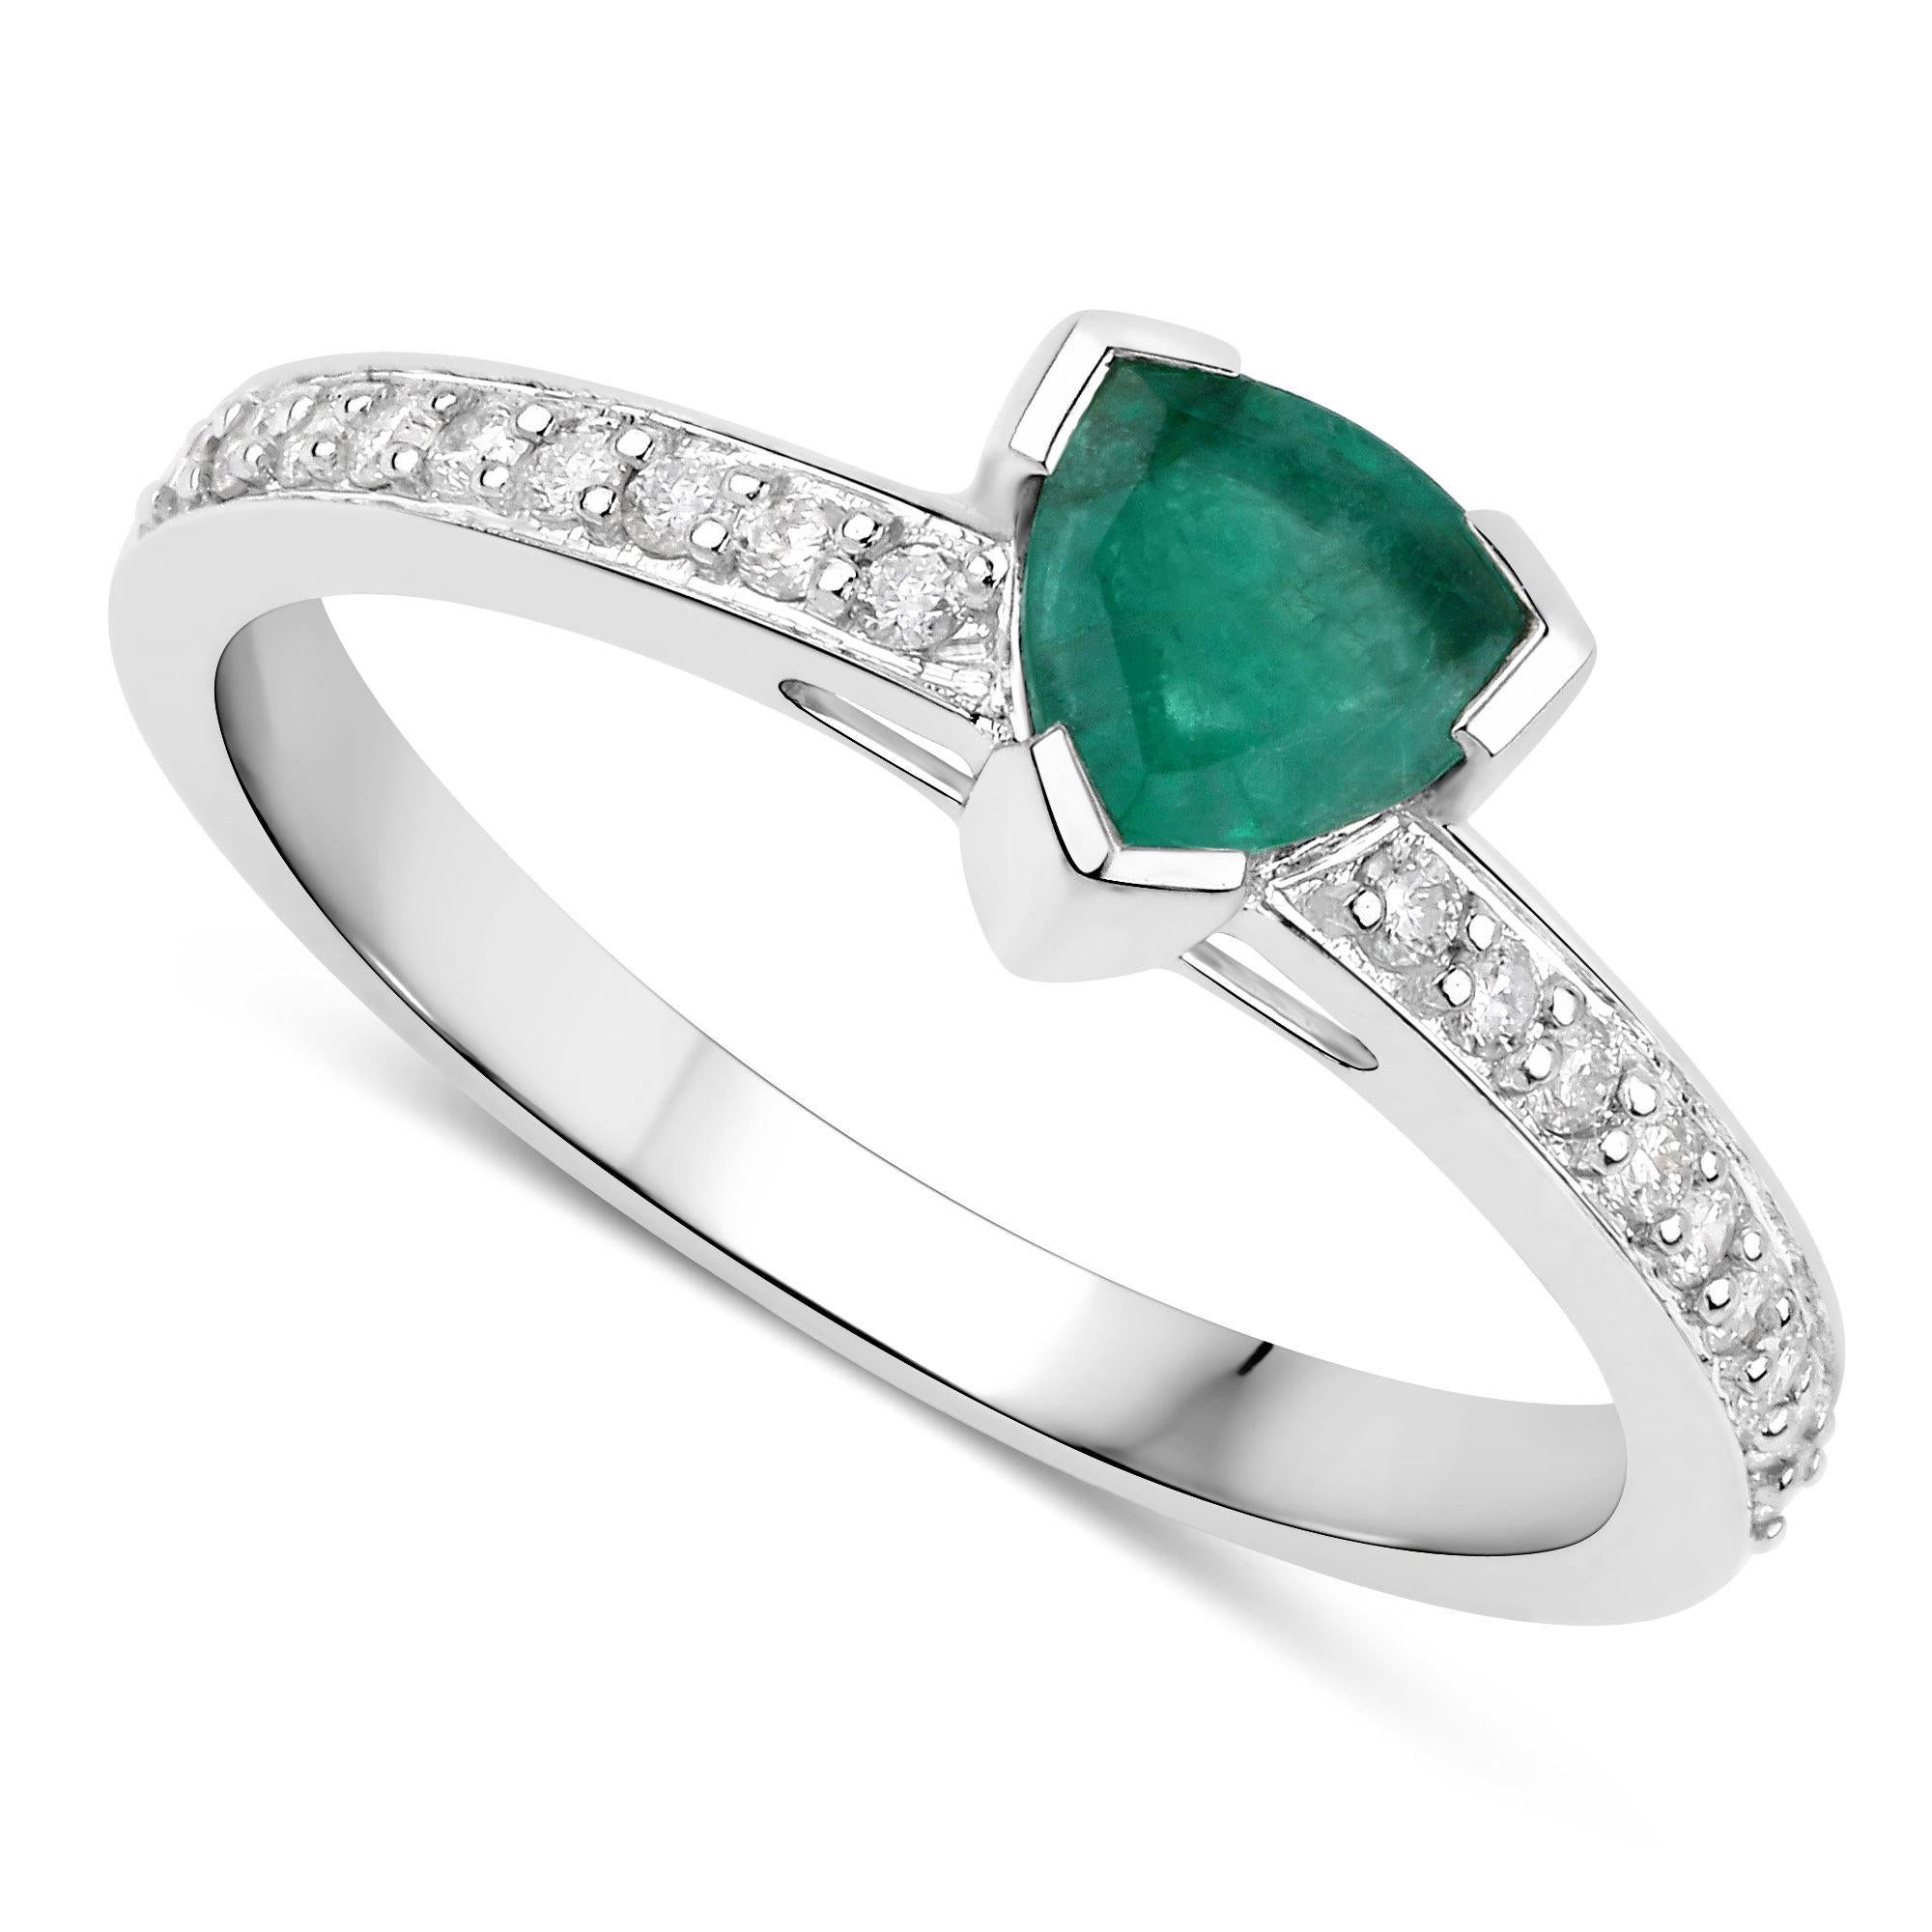 Natural Zambian Trillion Cut Emerald Ring Diamond Setting 14K White Gold In New Condition For Sale In Laguna Niguel, CA